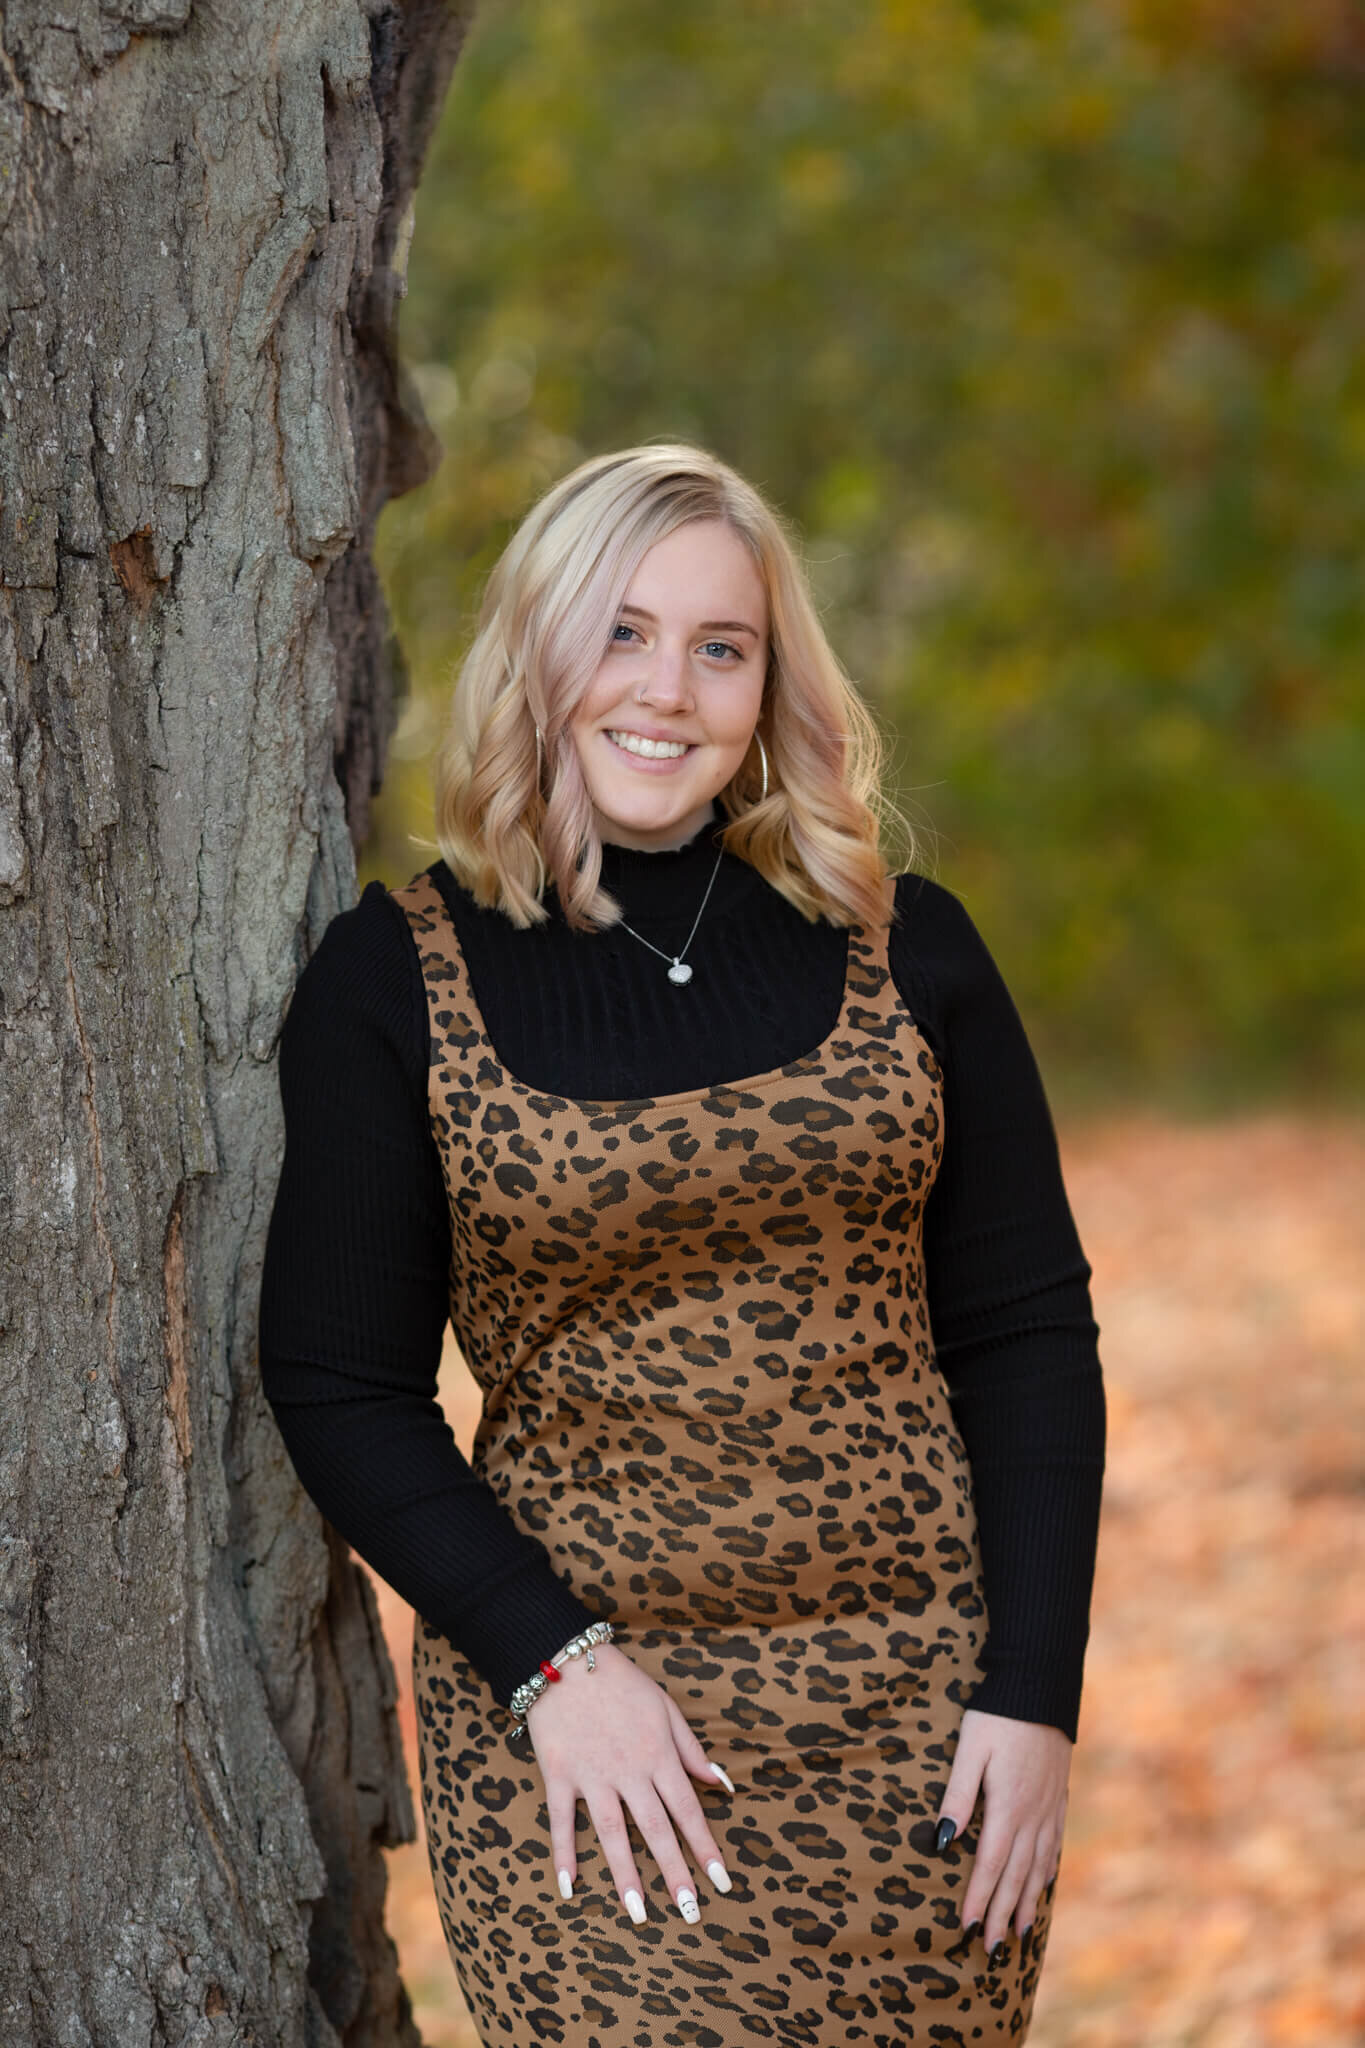 High school senior portrait of girl wearing leopard print dress leaning on a tree